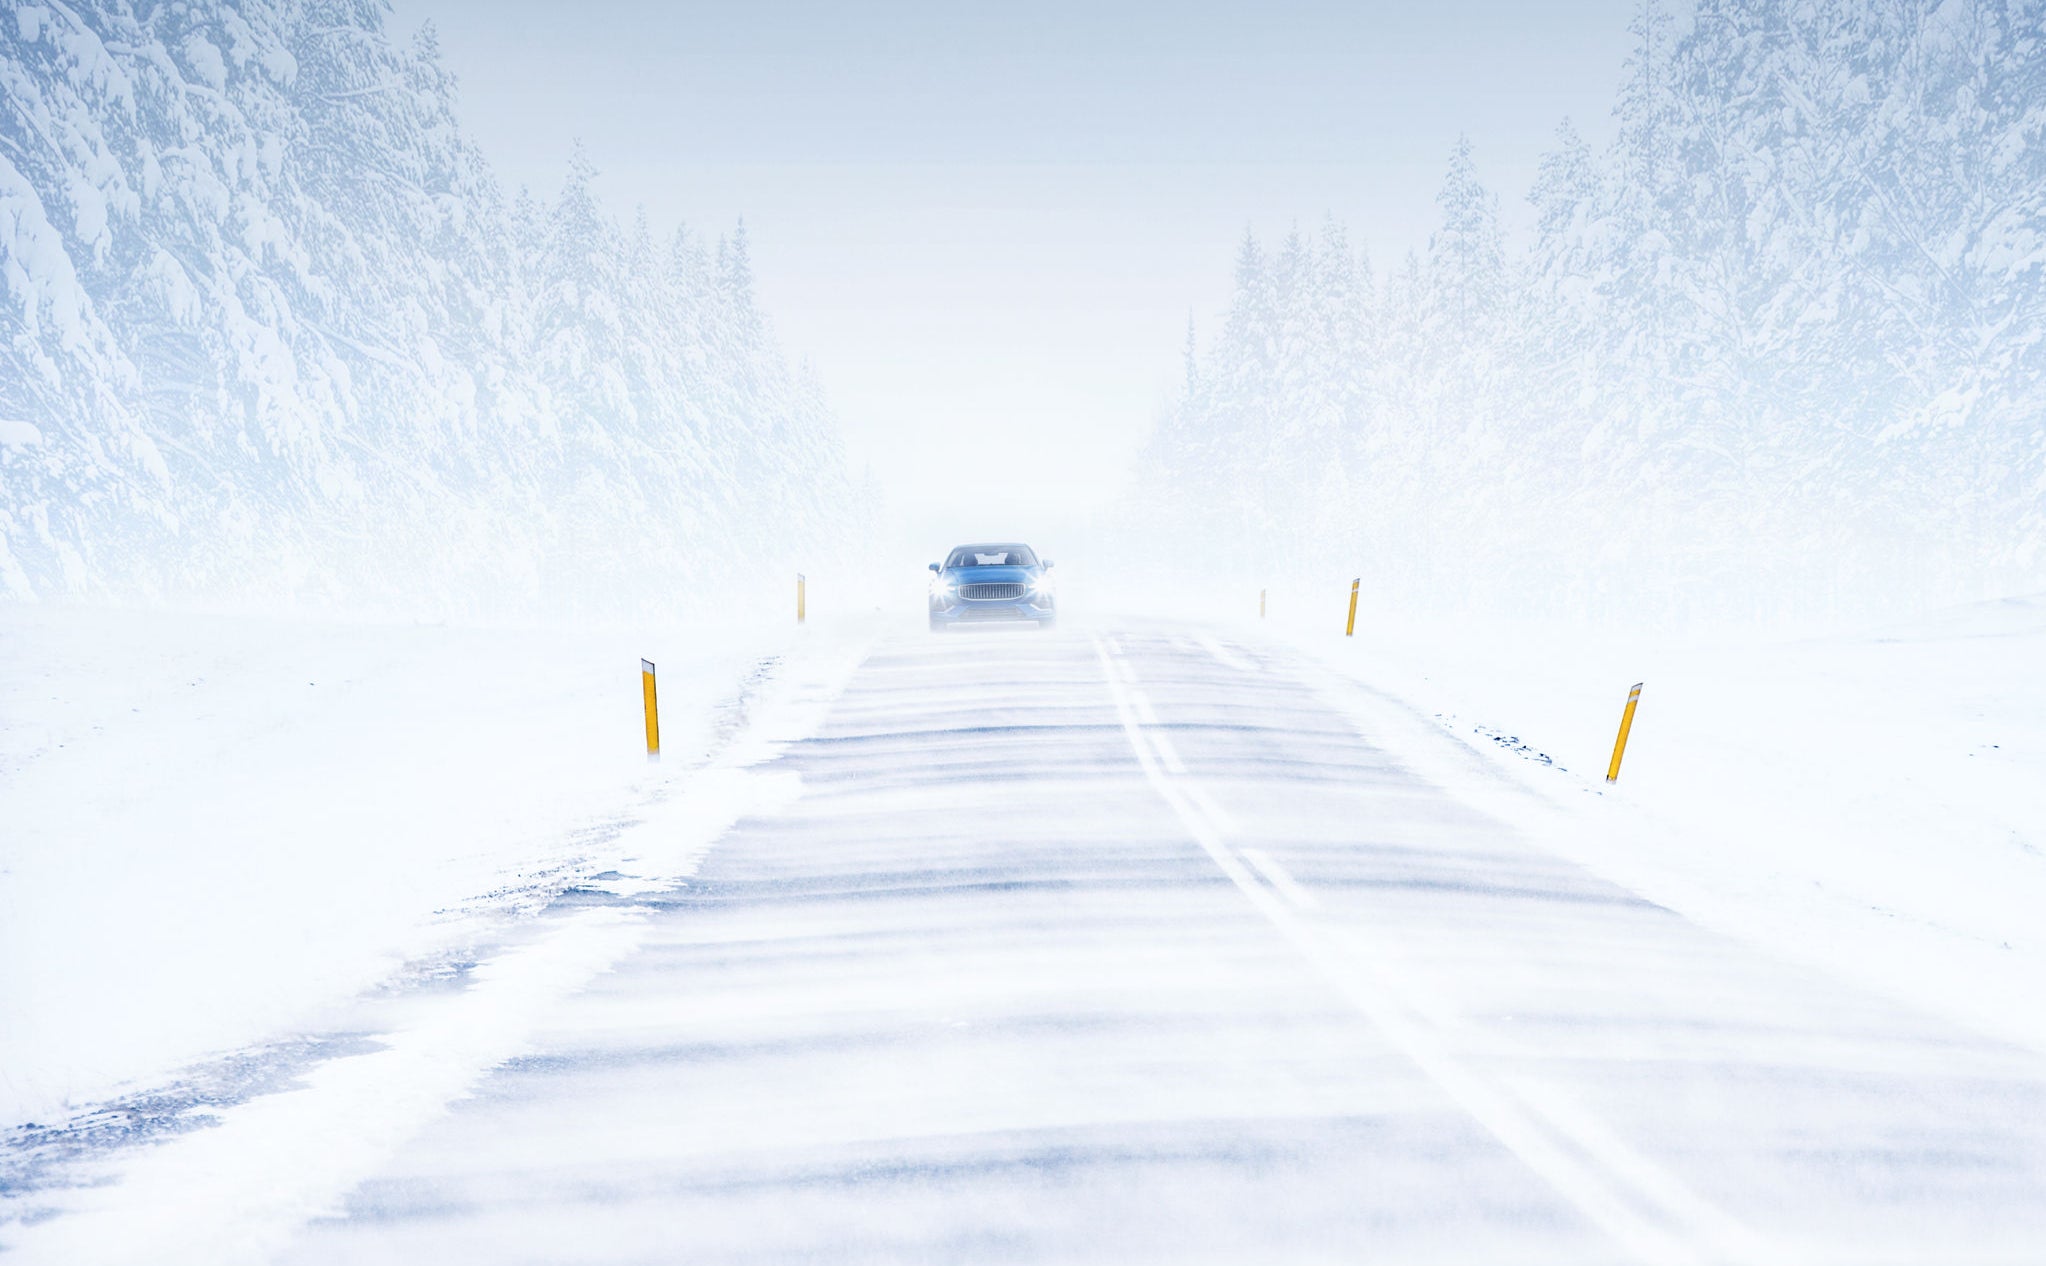 Gislaved Car in Snow Visual Bright Winter 19